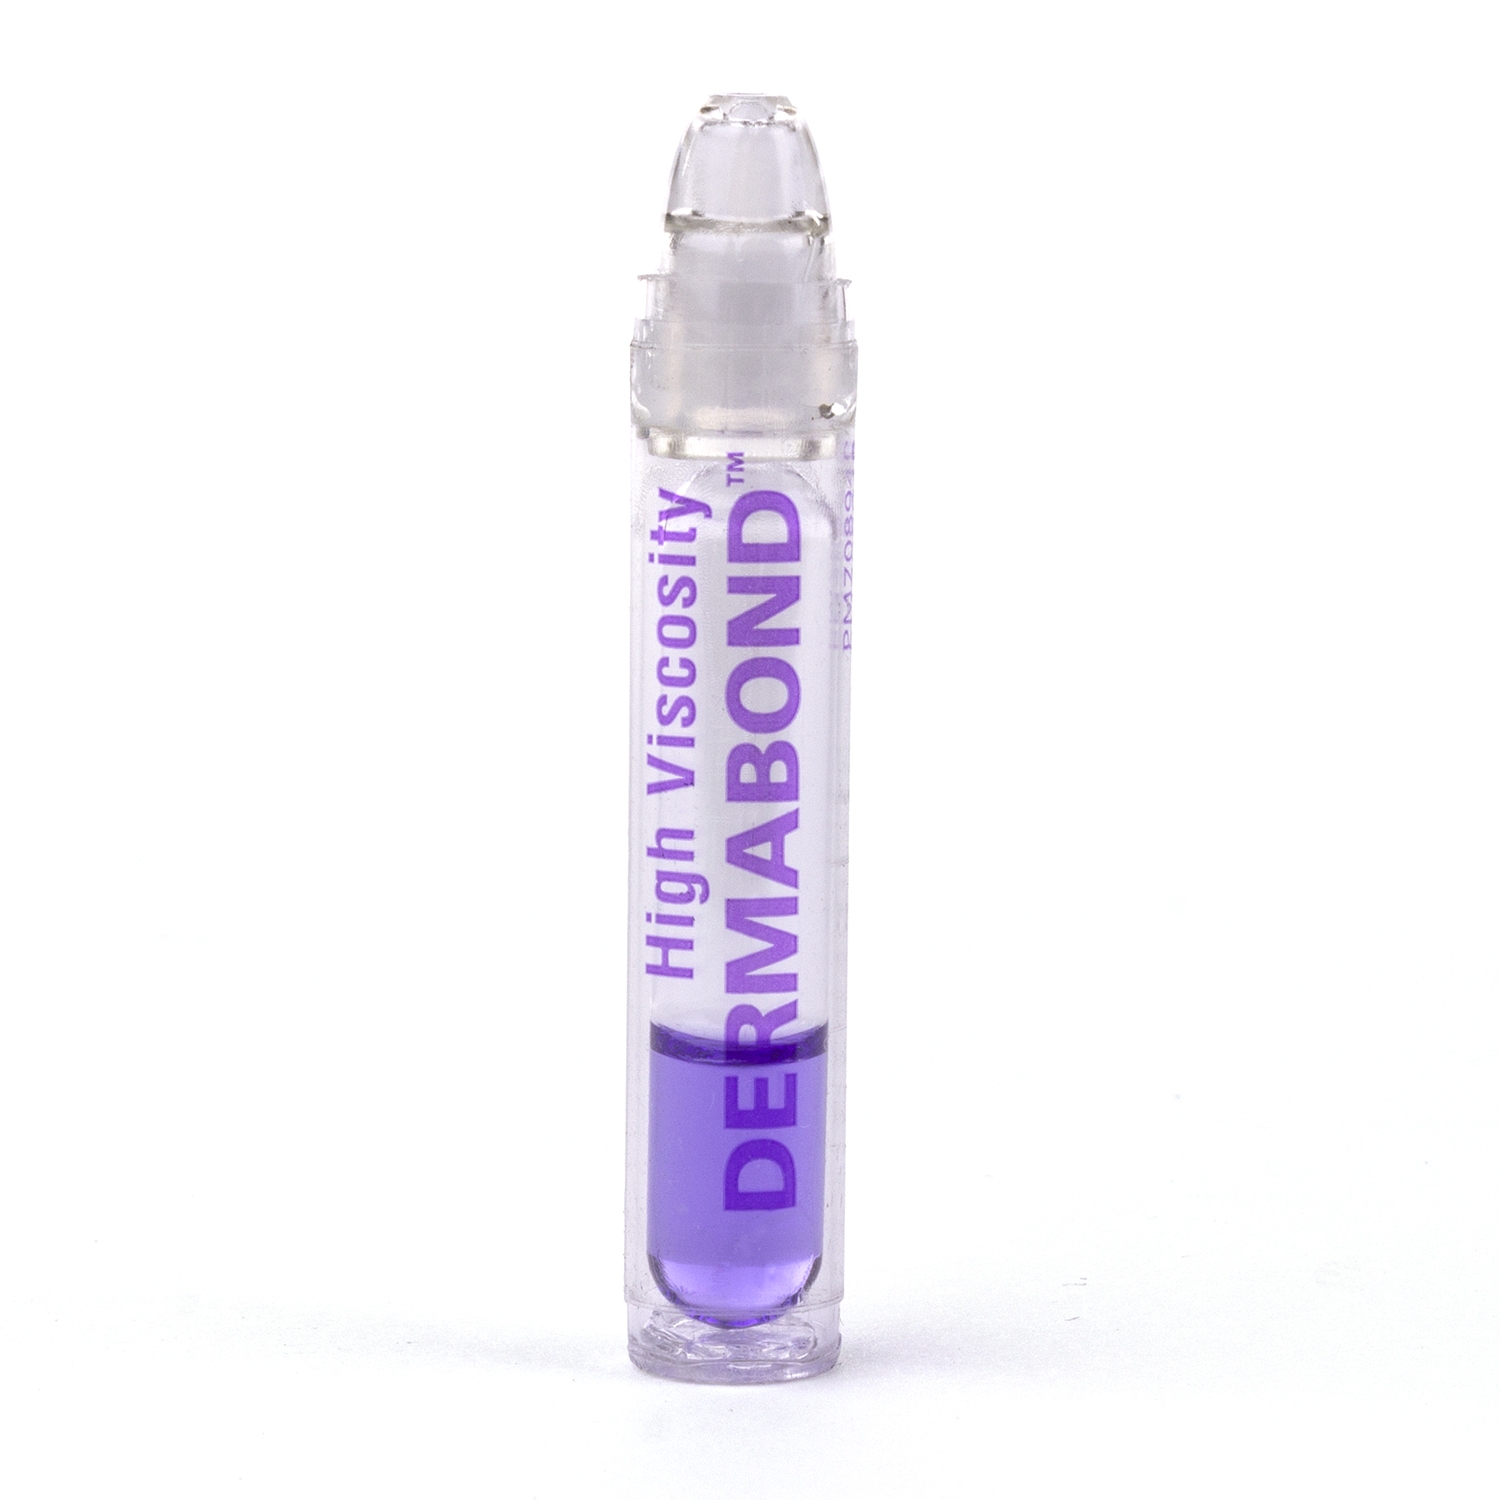 Dermabond mini - 0,36 ml (12 st)